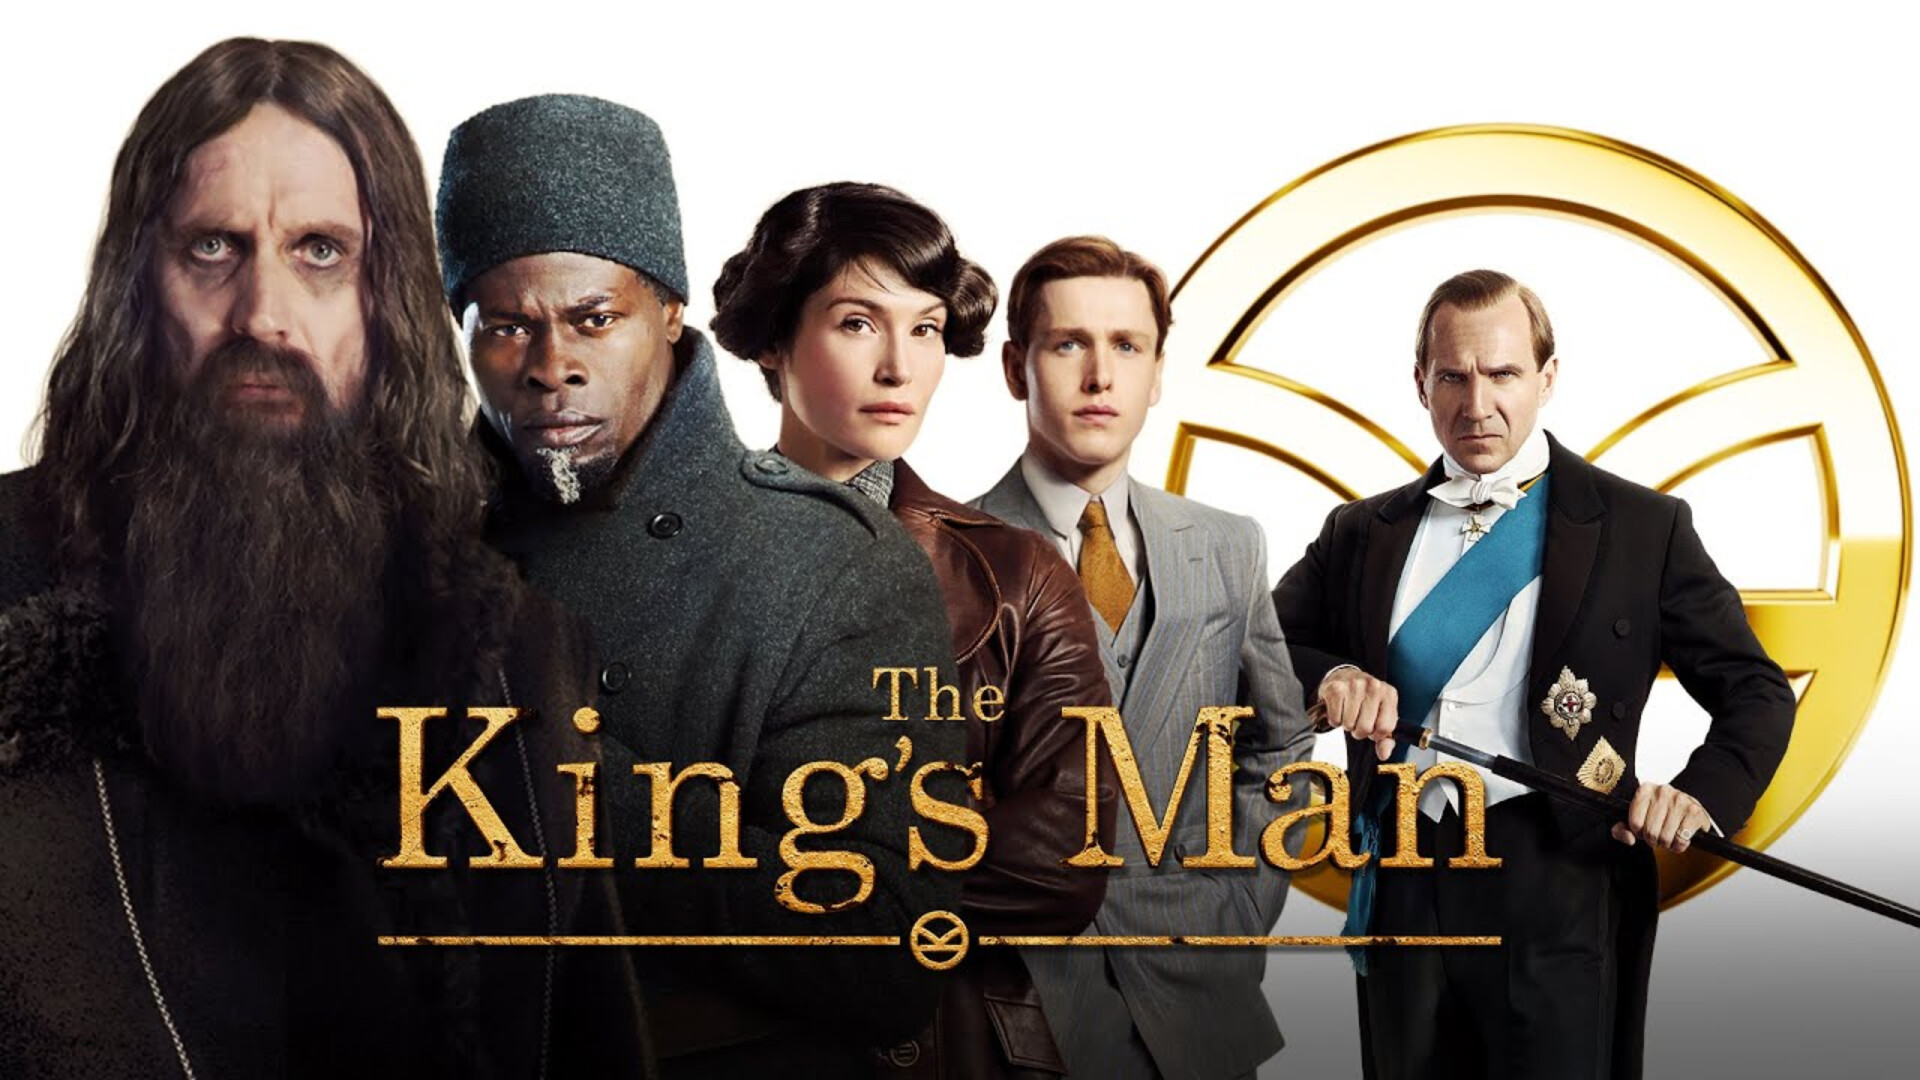 The King's Man: The film had its world premiere in London, United Kingdom on 5 December 2021. 1920x1080 Full HD Wallpaper.